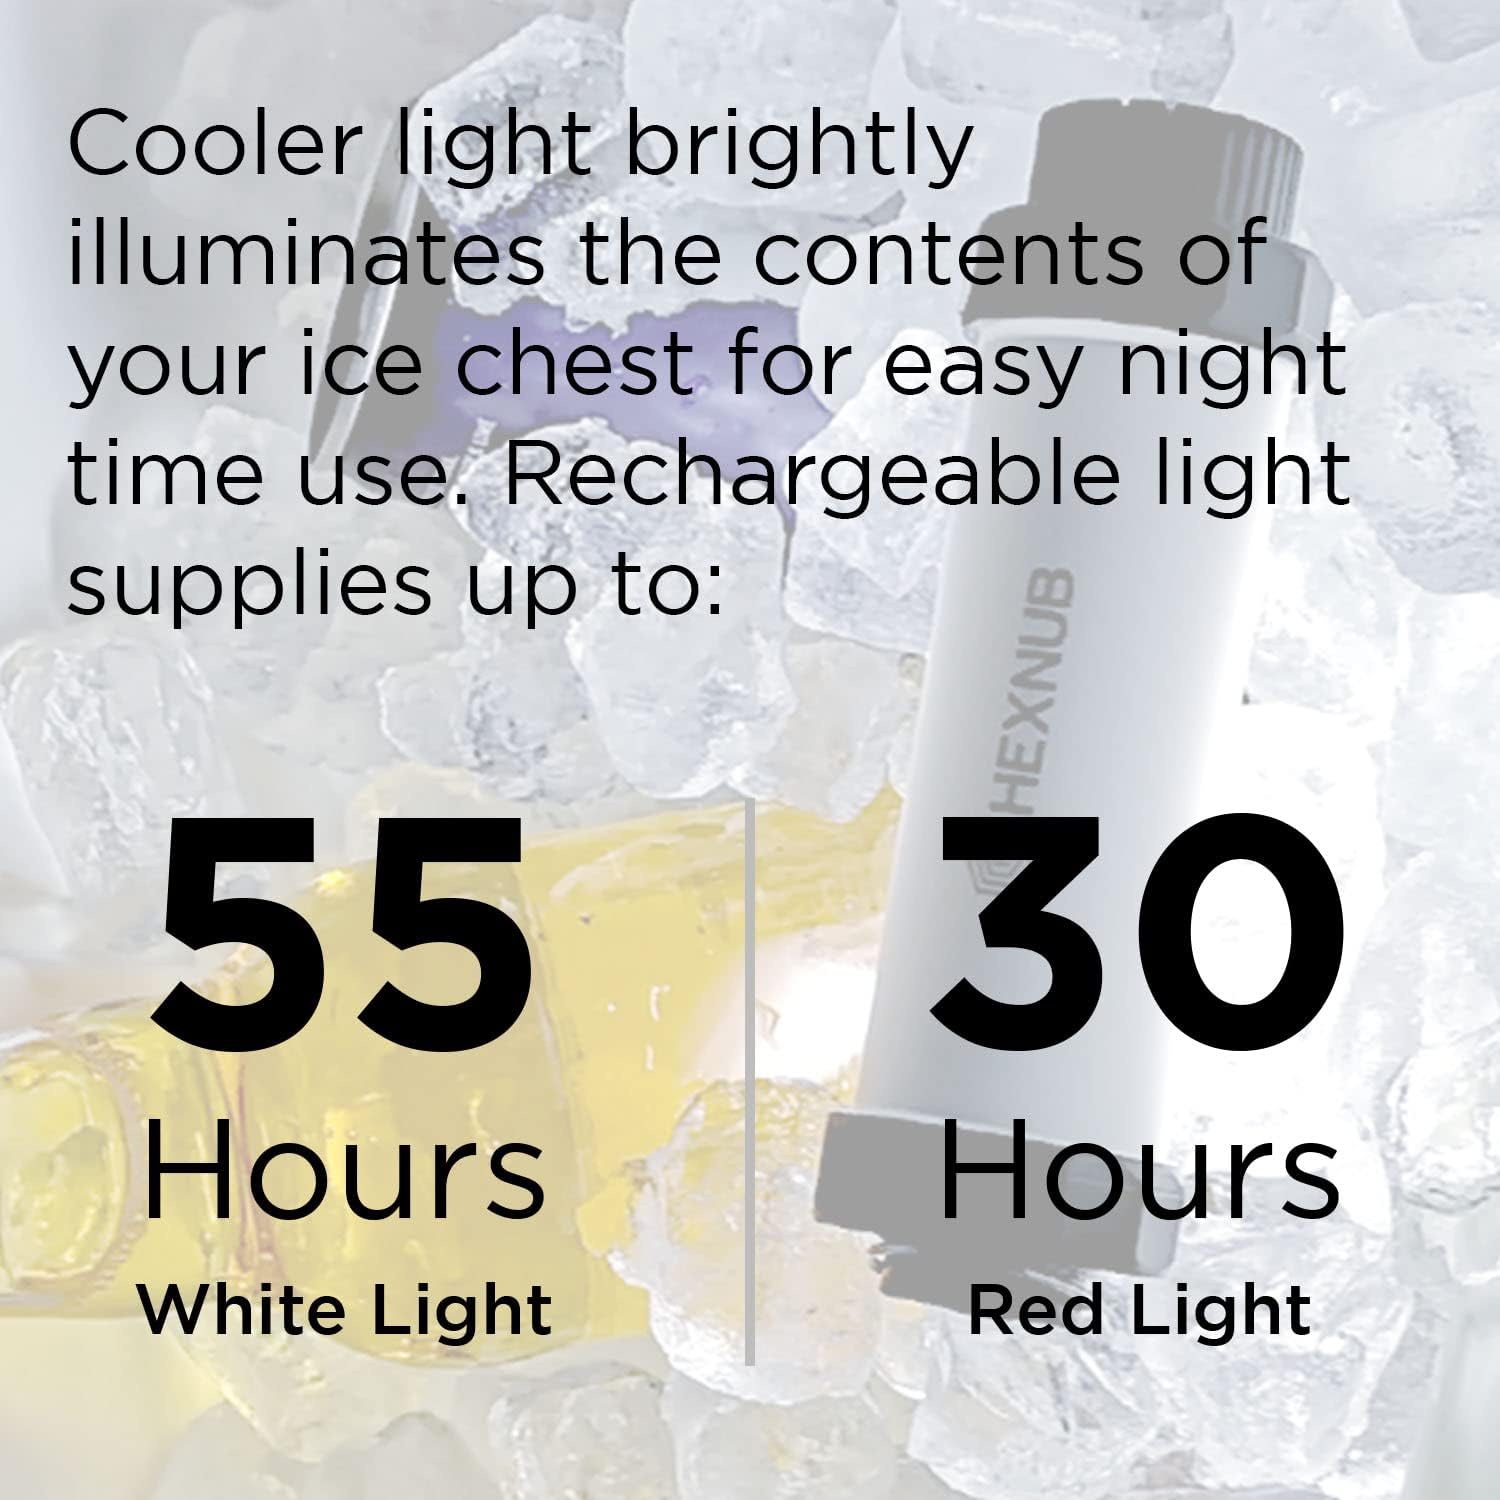 HEXNUB Luz LED recargable impermeable ideal para eventos al aire libre